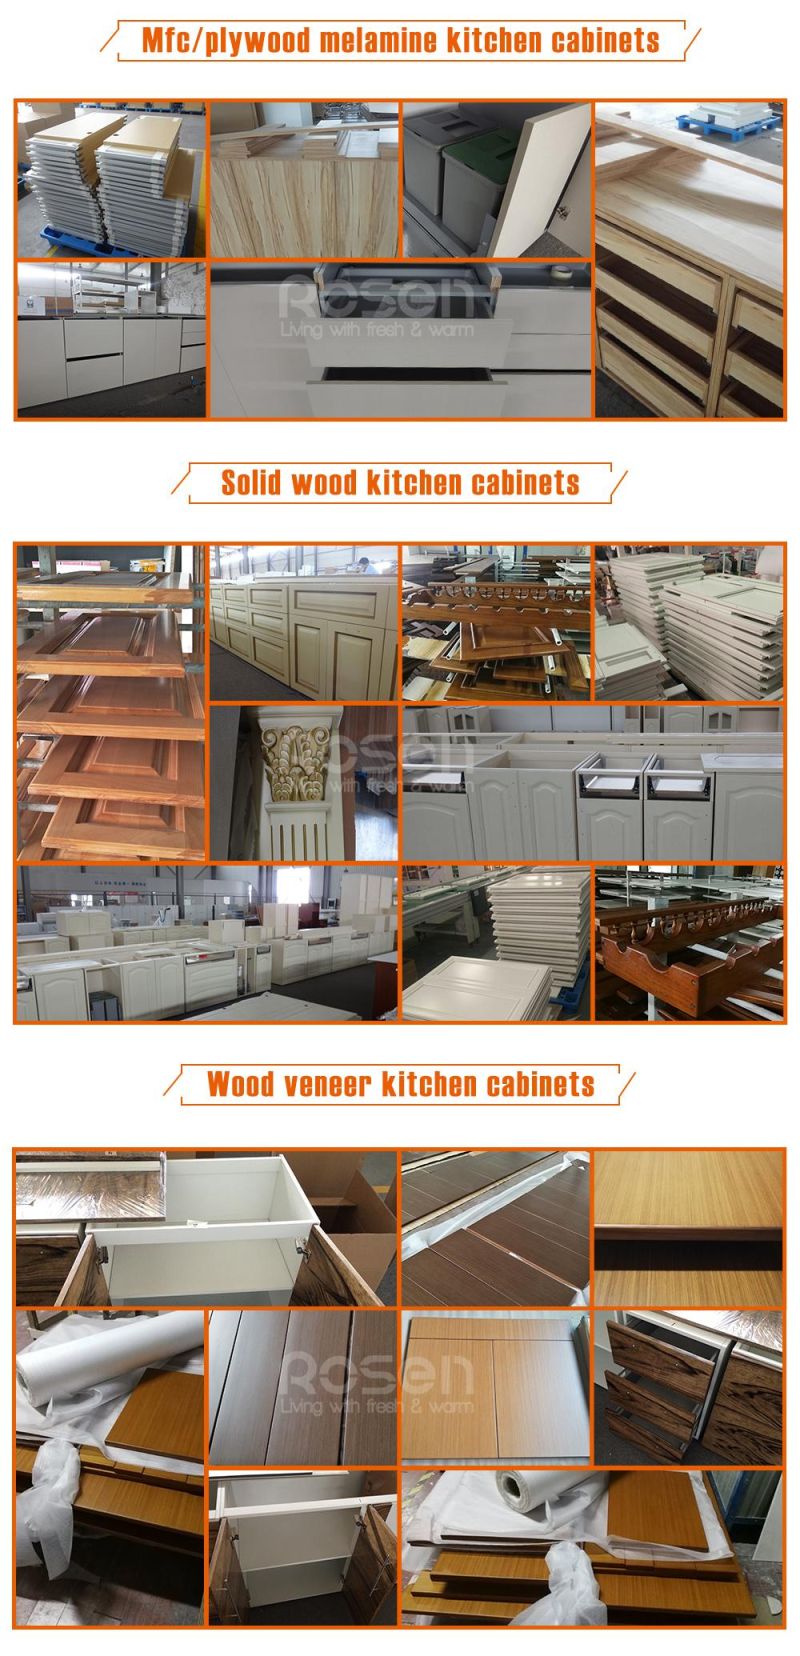 Home Aisle Style Durable Freestanding Wood Grain Flat Laminate Kitchen Cabinet